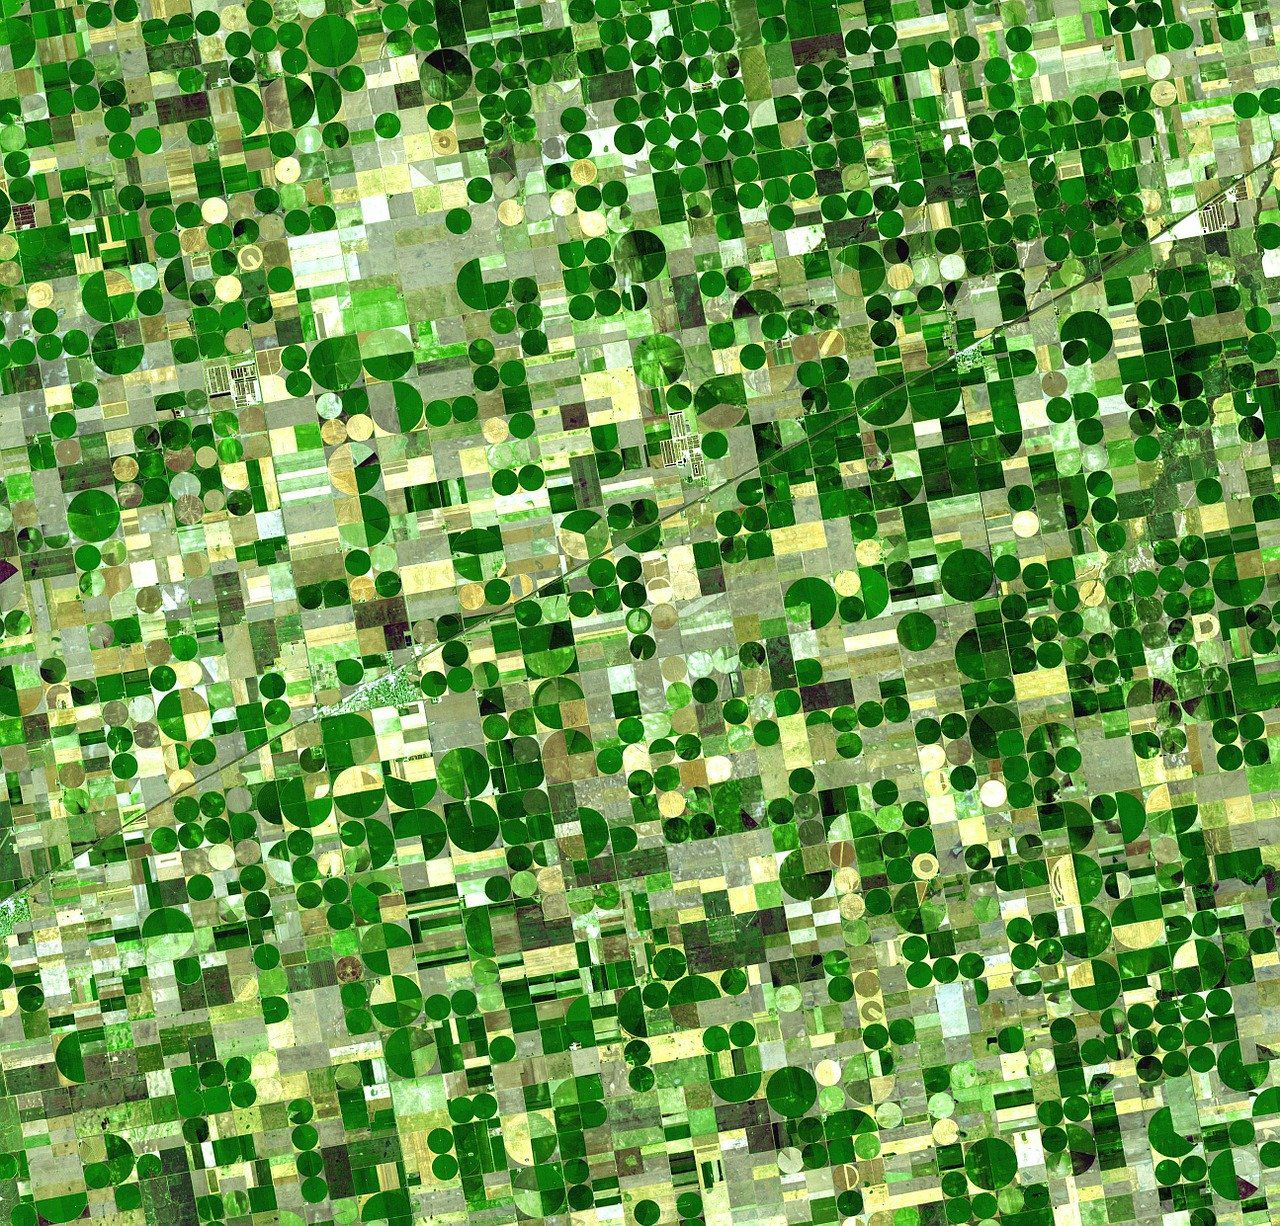 satellite image of a farm